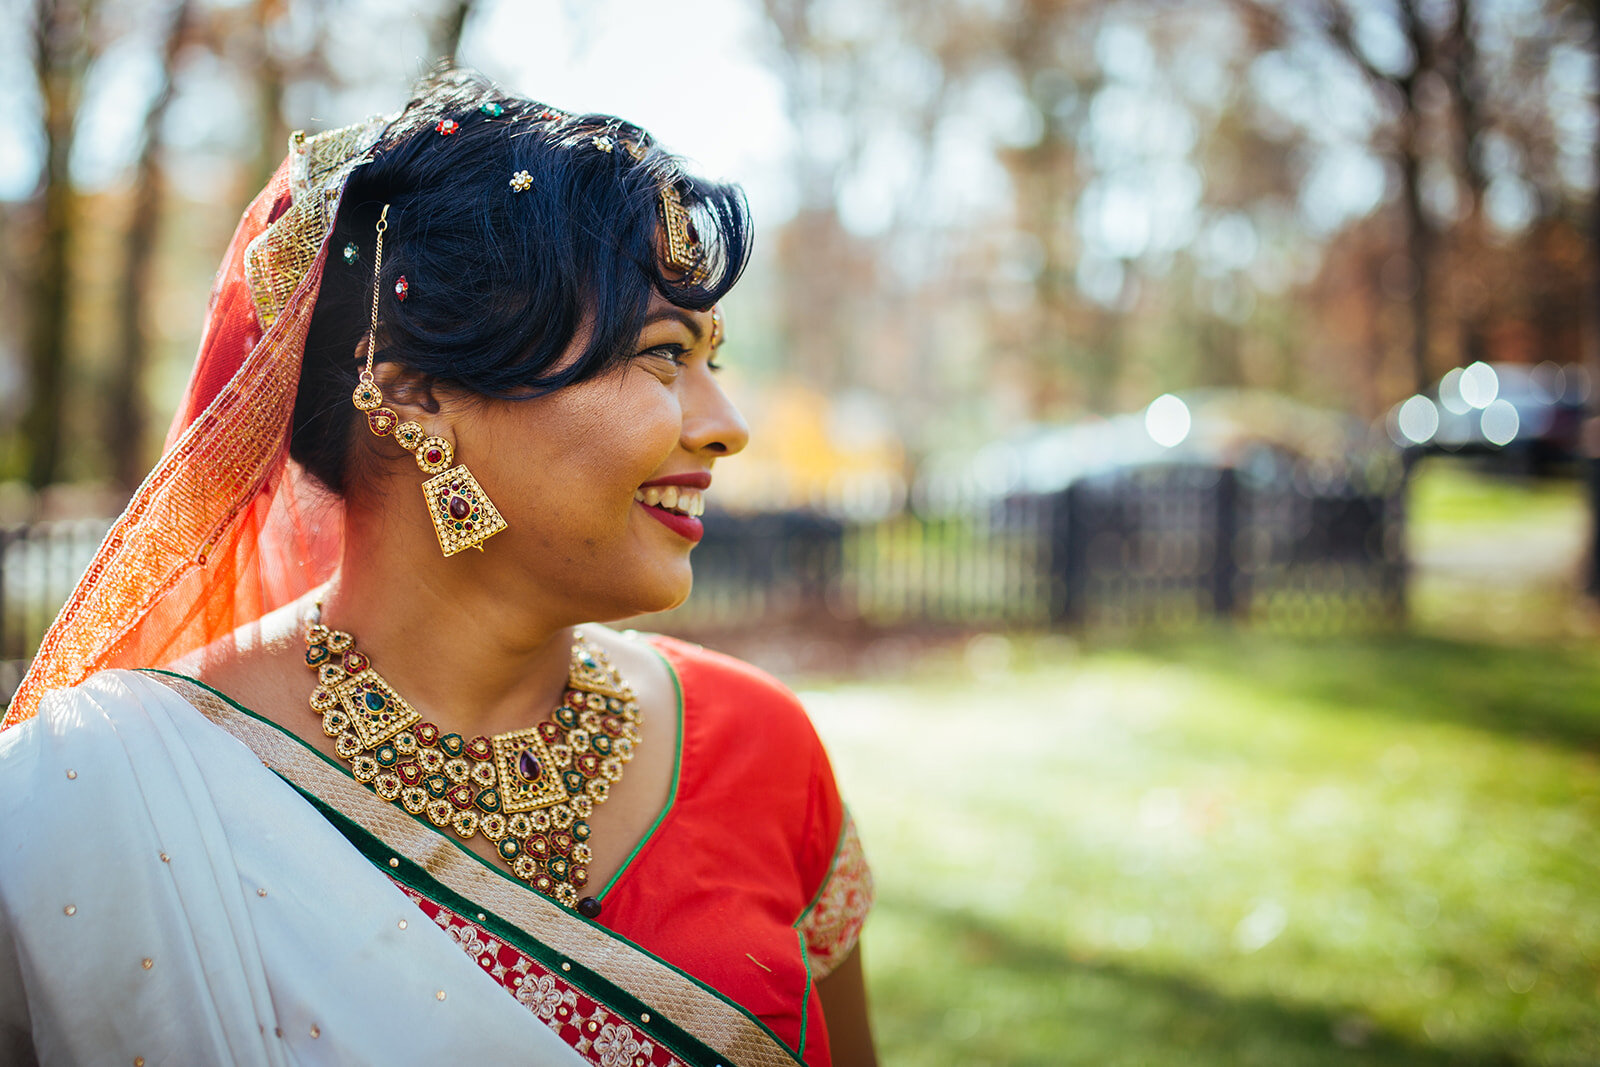 Indian Bride with ornate jewelry in Richmond VA Shawnee Custalow wedding photographer